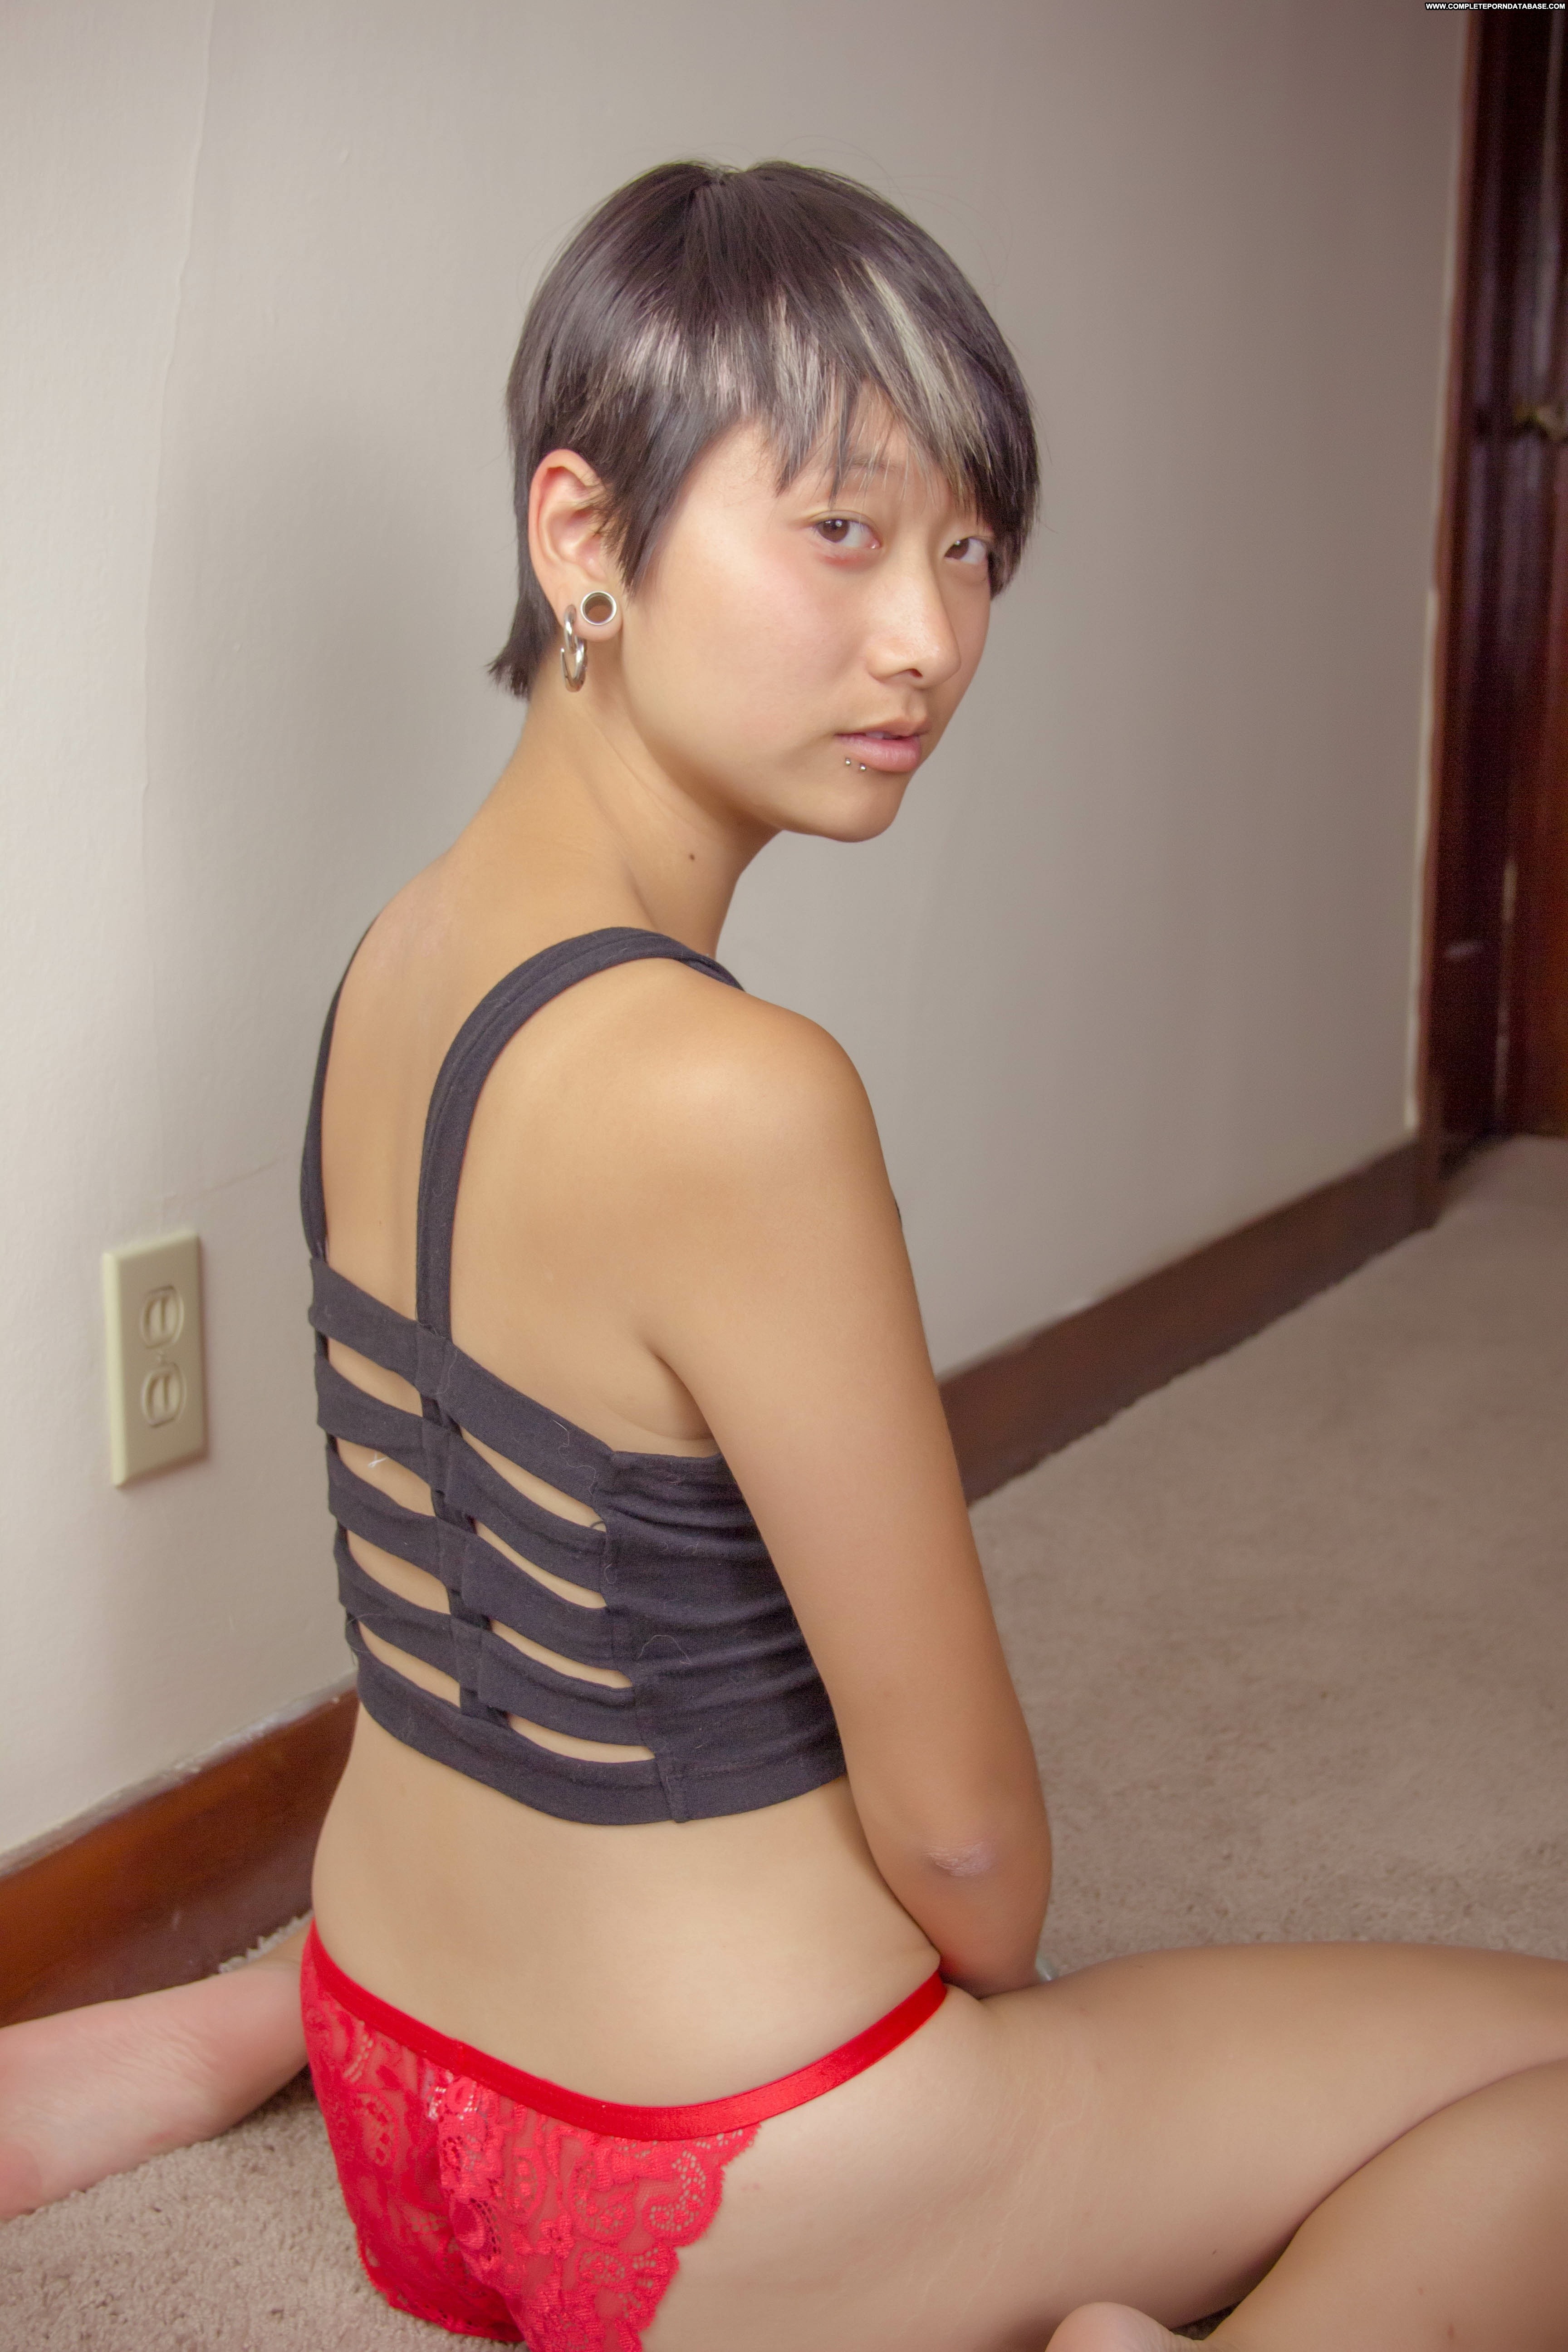 20829-denine-teen-girl-firm-tits-photo-model-nude-asian-model-photo